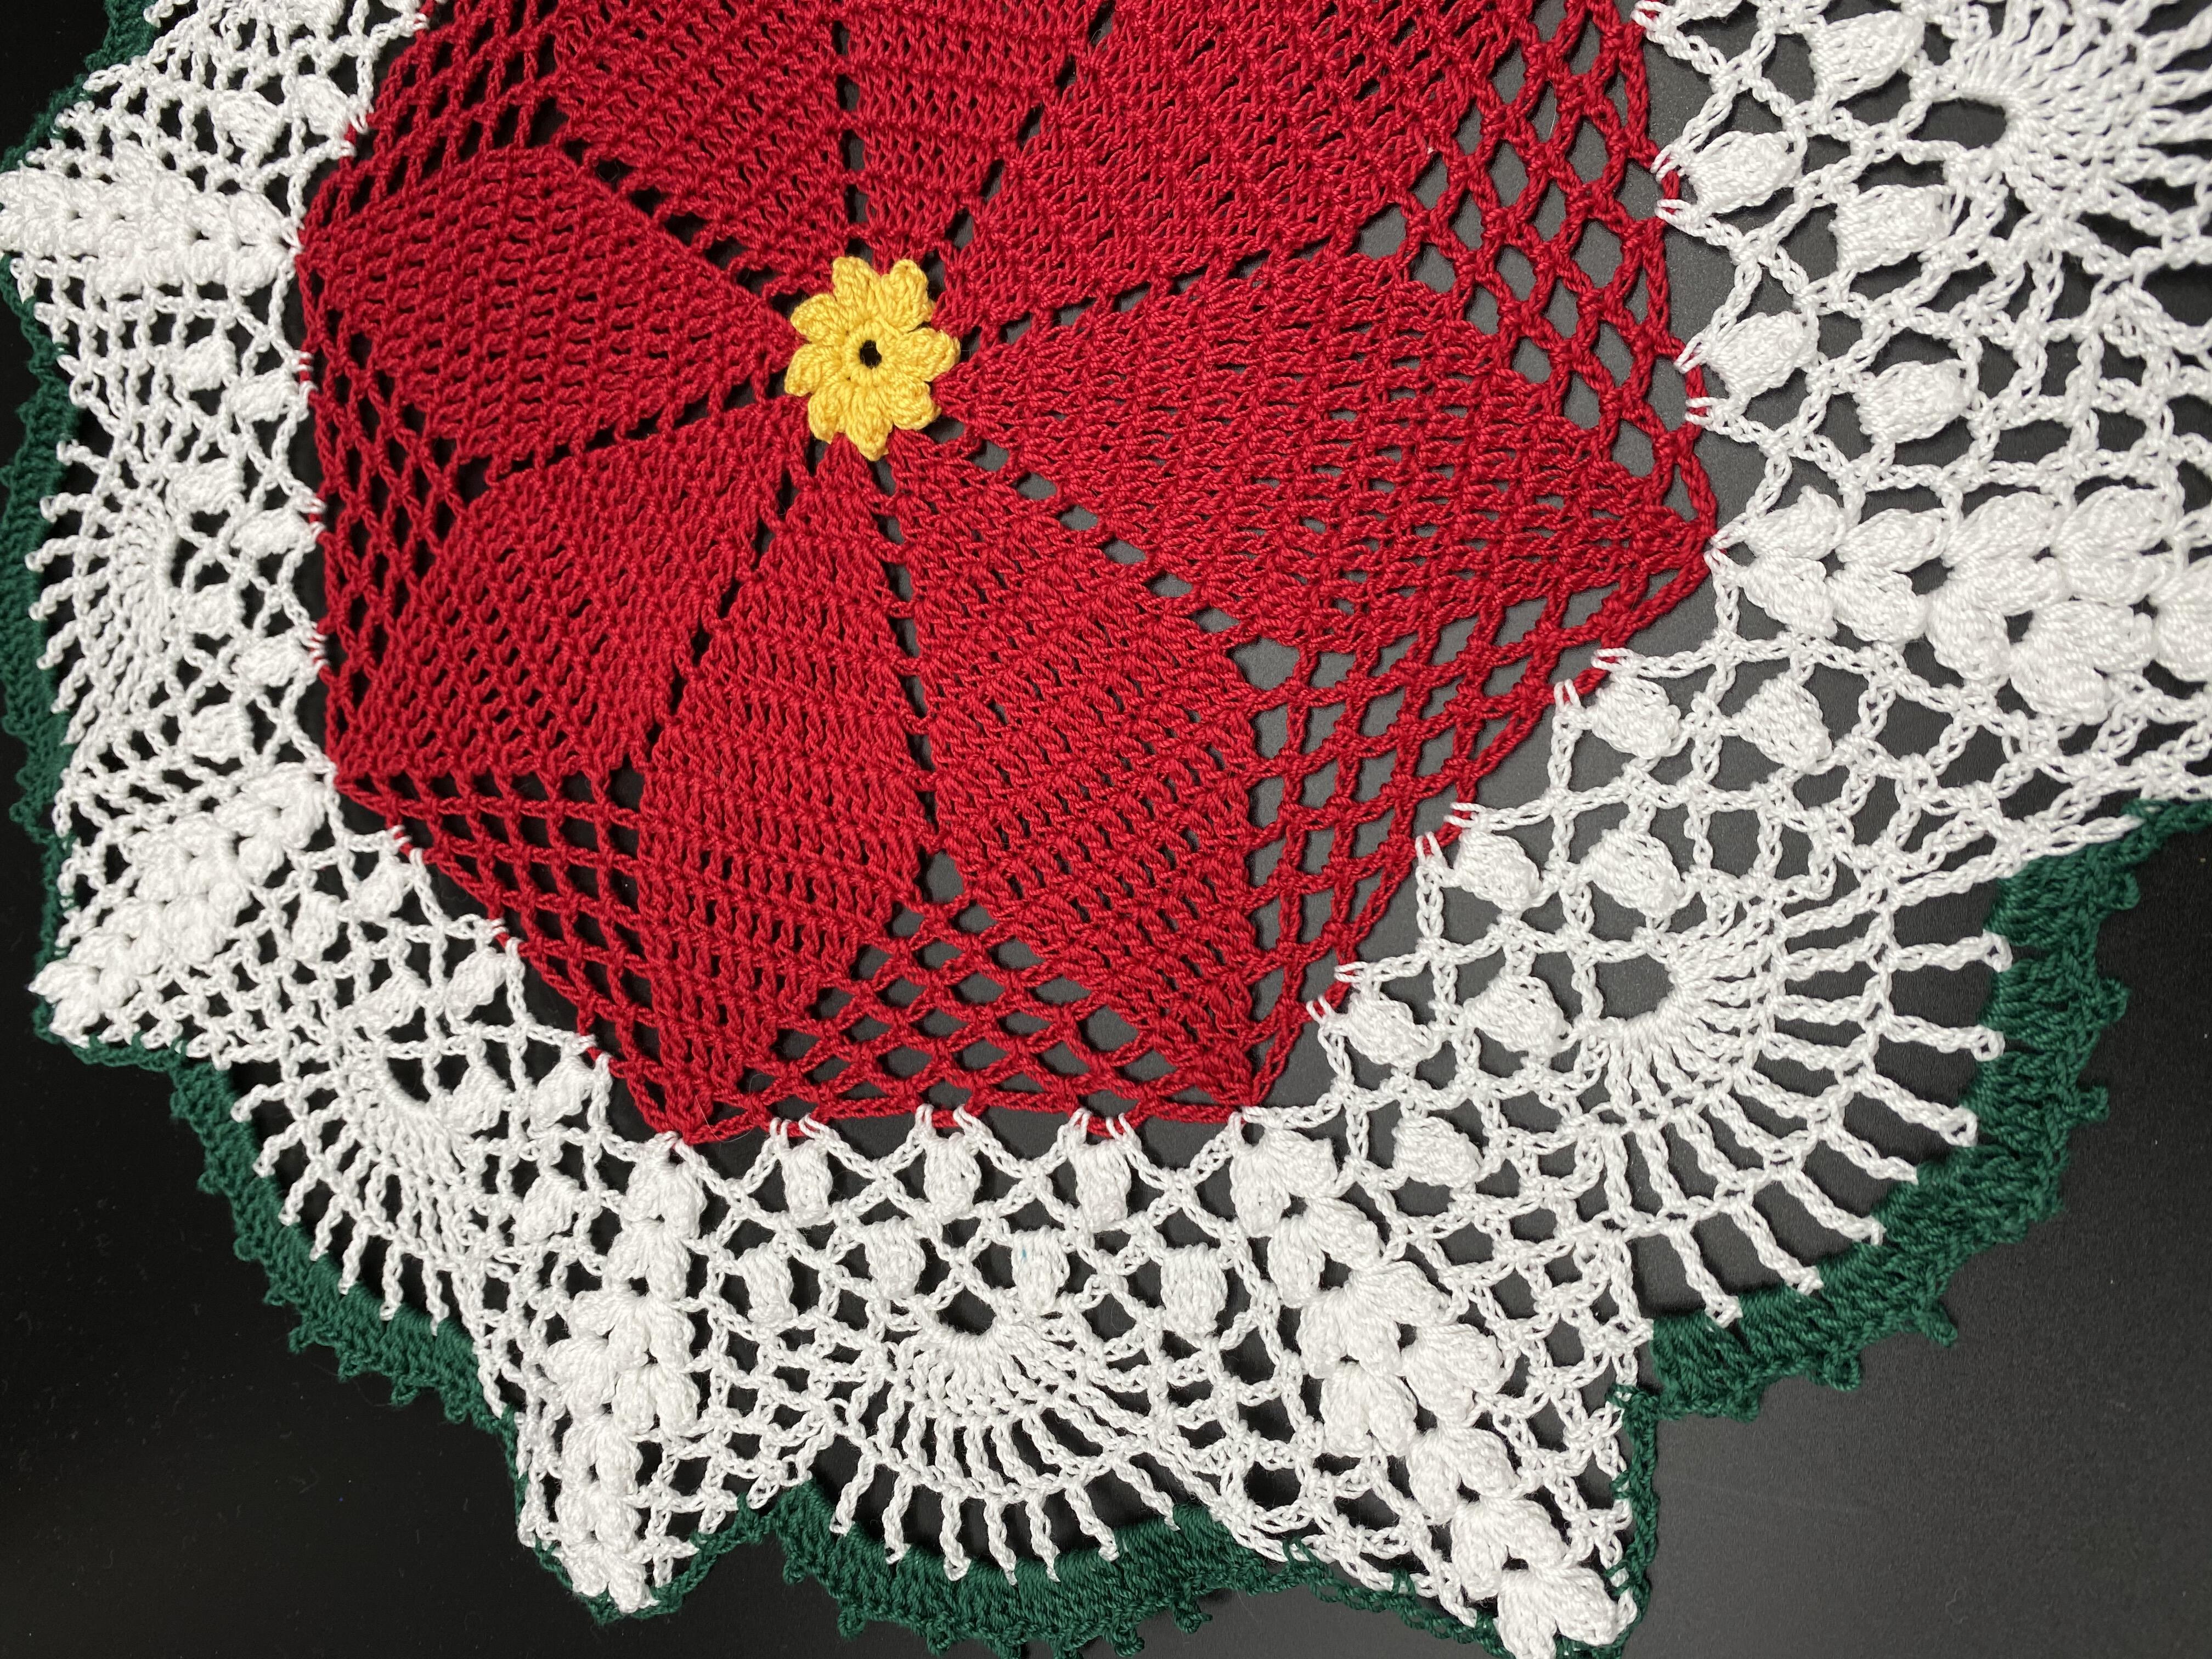 Poinsettia flower doily Red doily Hand crocheted doily Merry Christmas Decor 